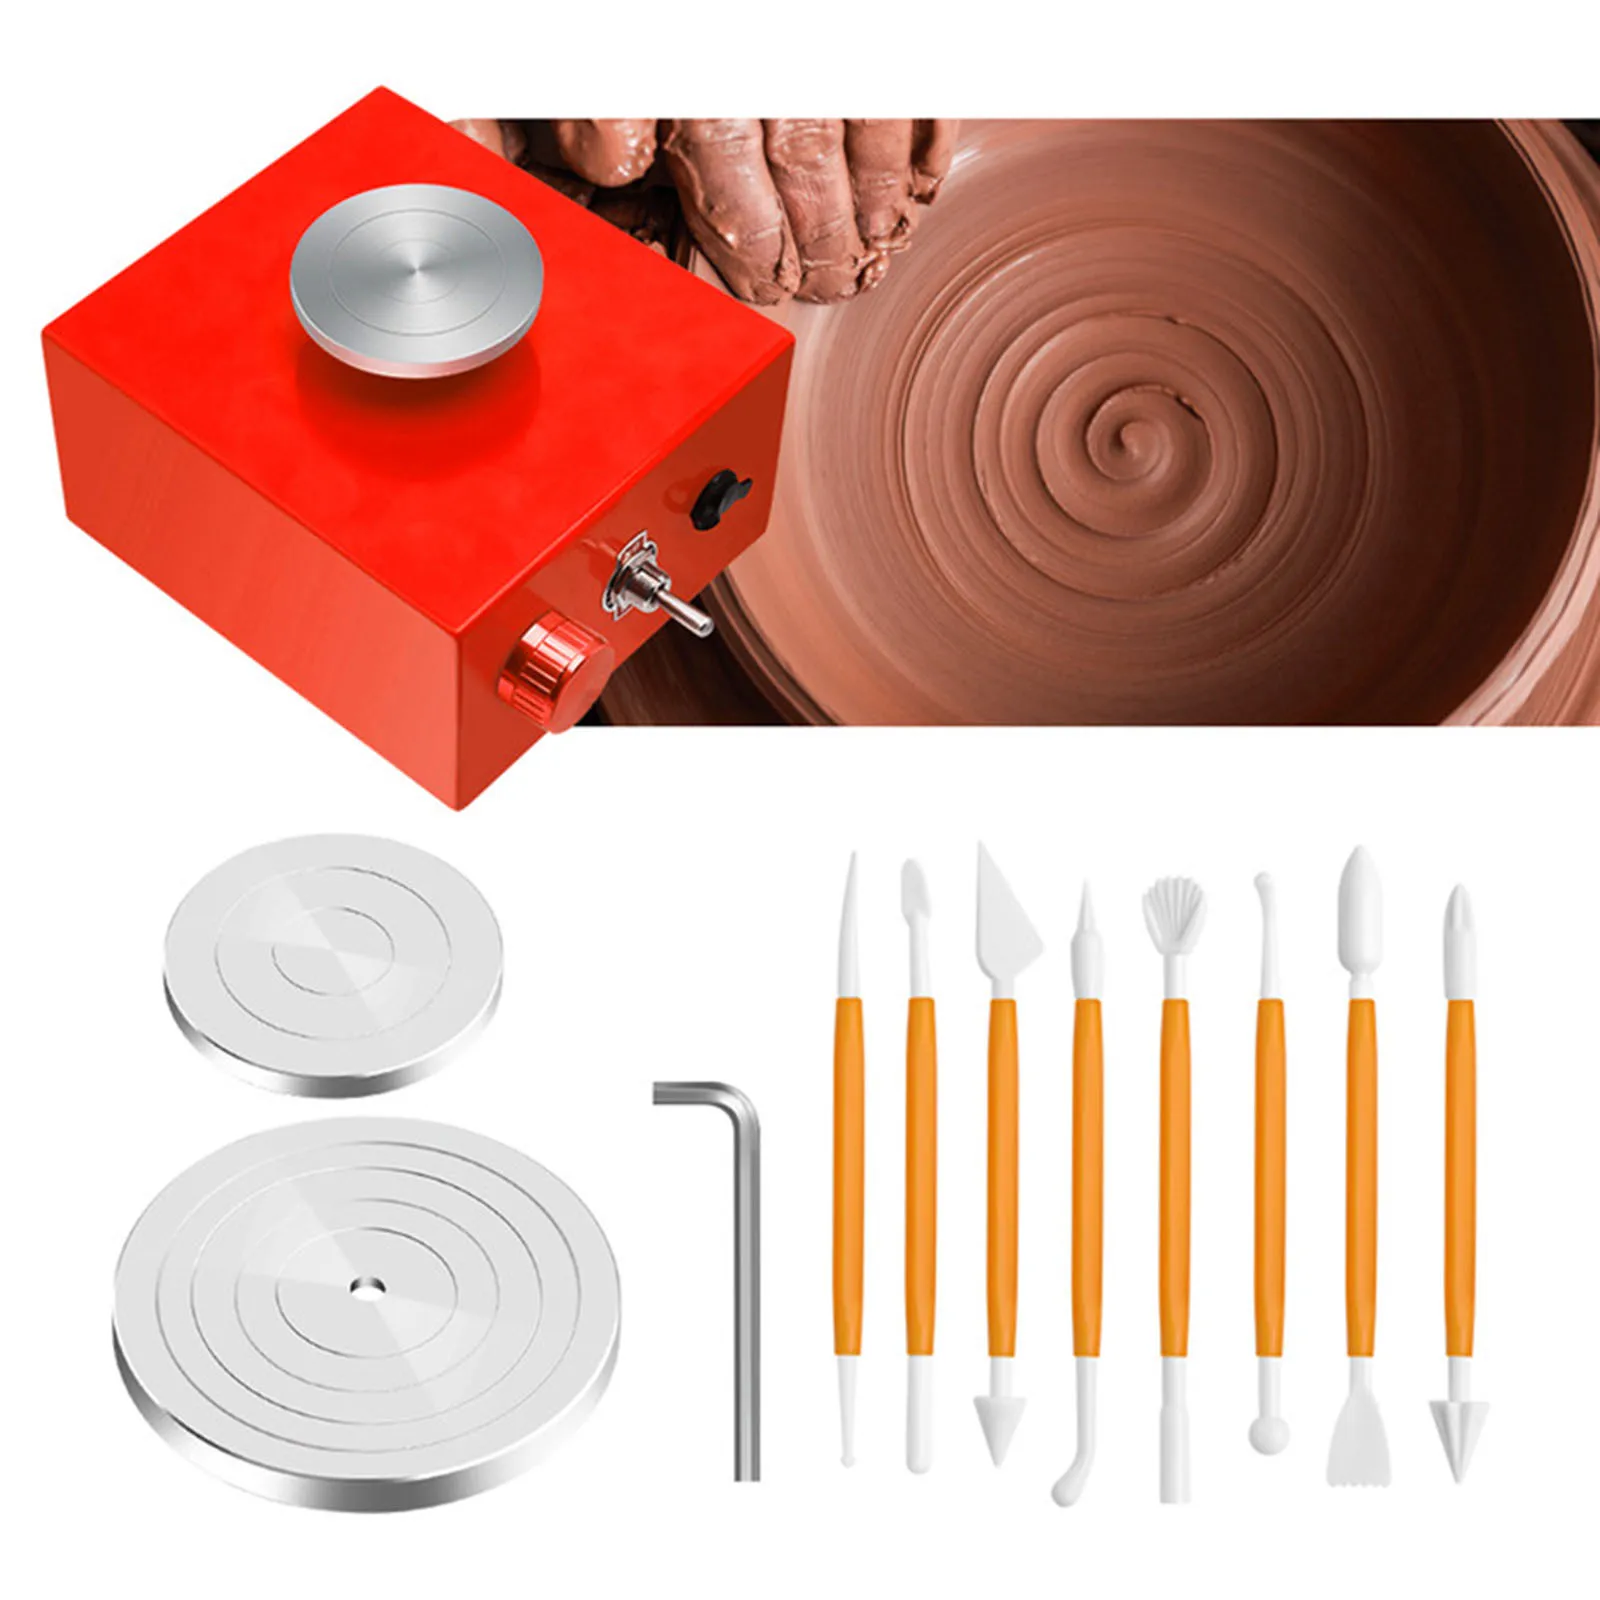 Mini Electric Pottery Wheel Machine for Ceramic Work Art Craft Turntable Rotary Plate DIY Clay Tool Kids Teaching Aids